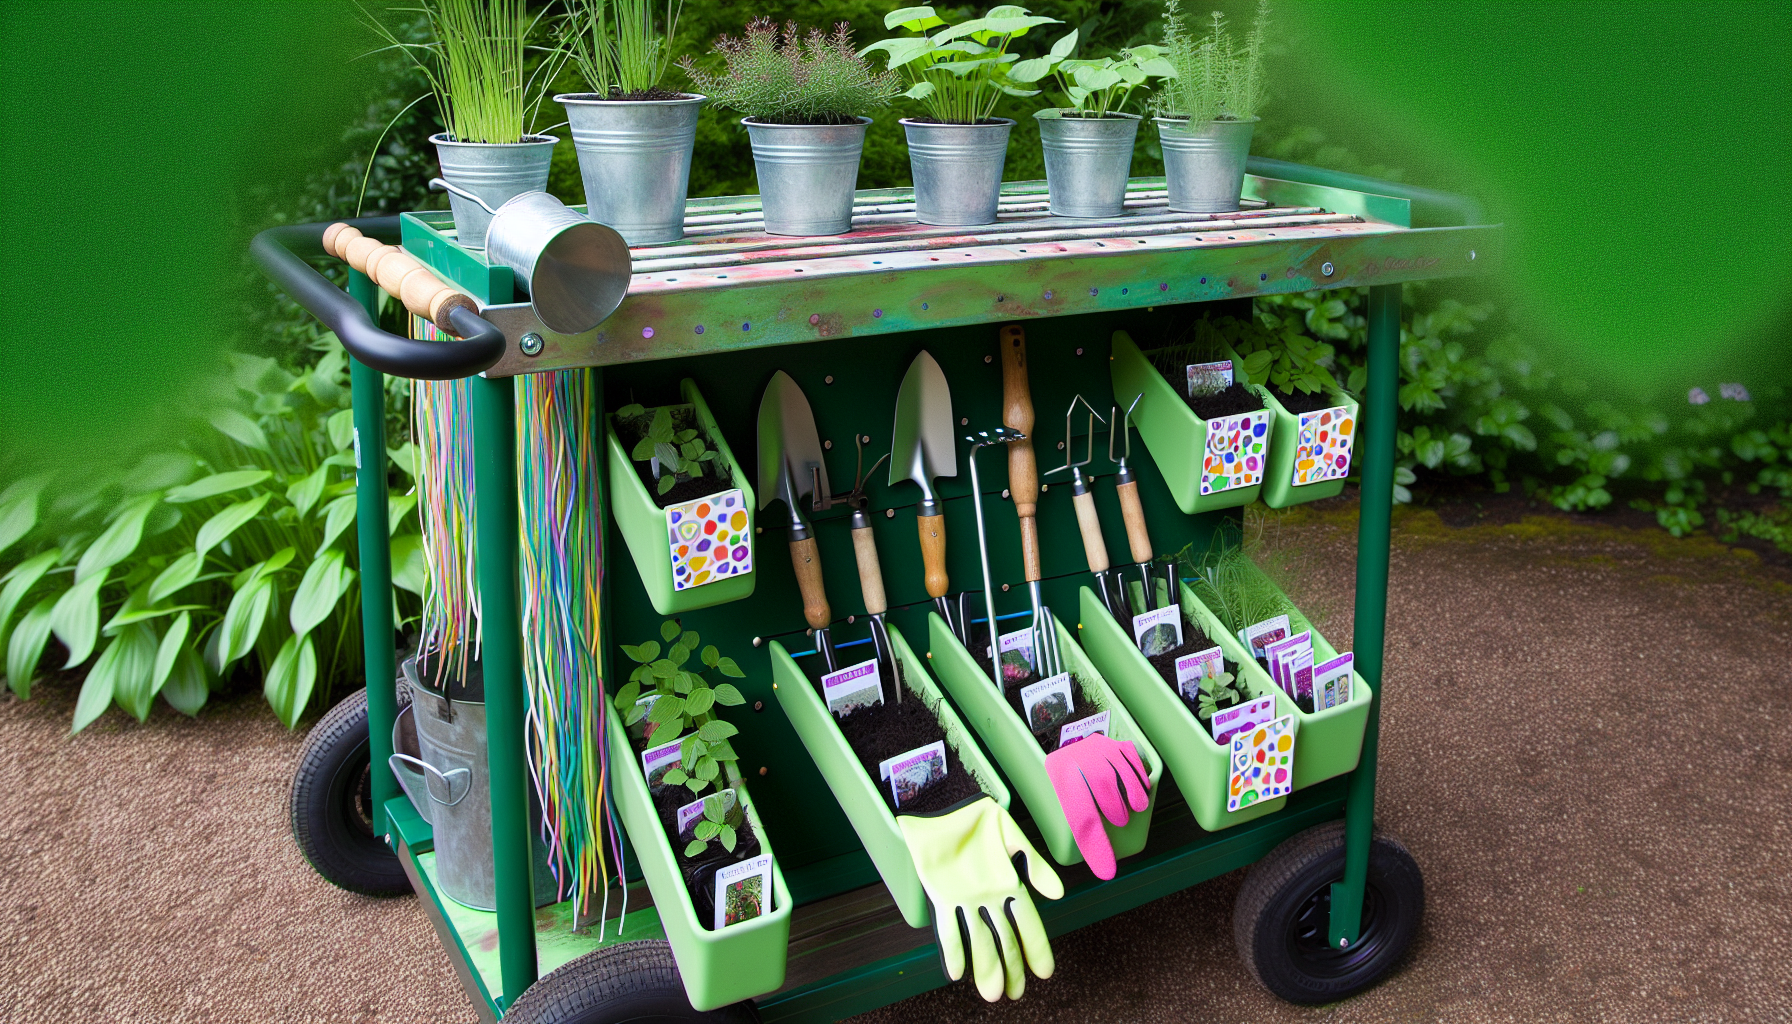 Creative use of a utility cart as a mobile garden station